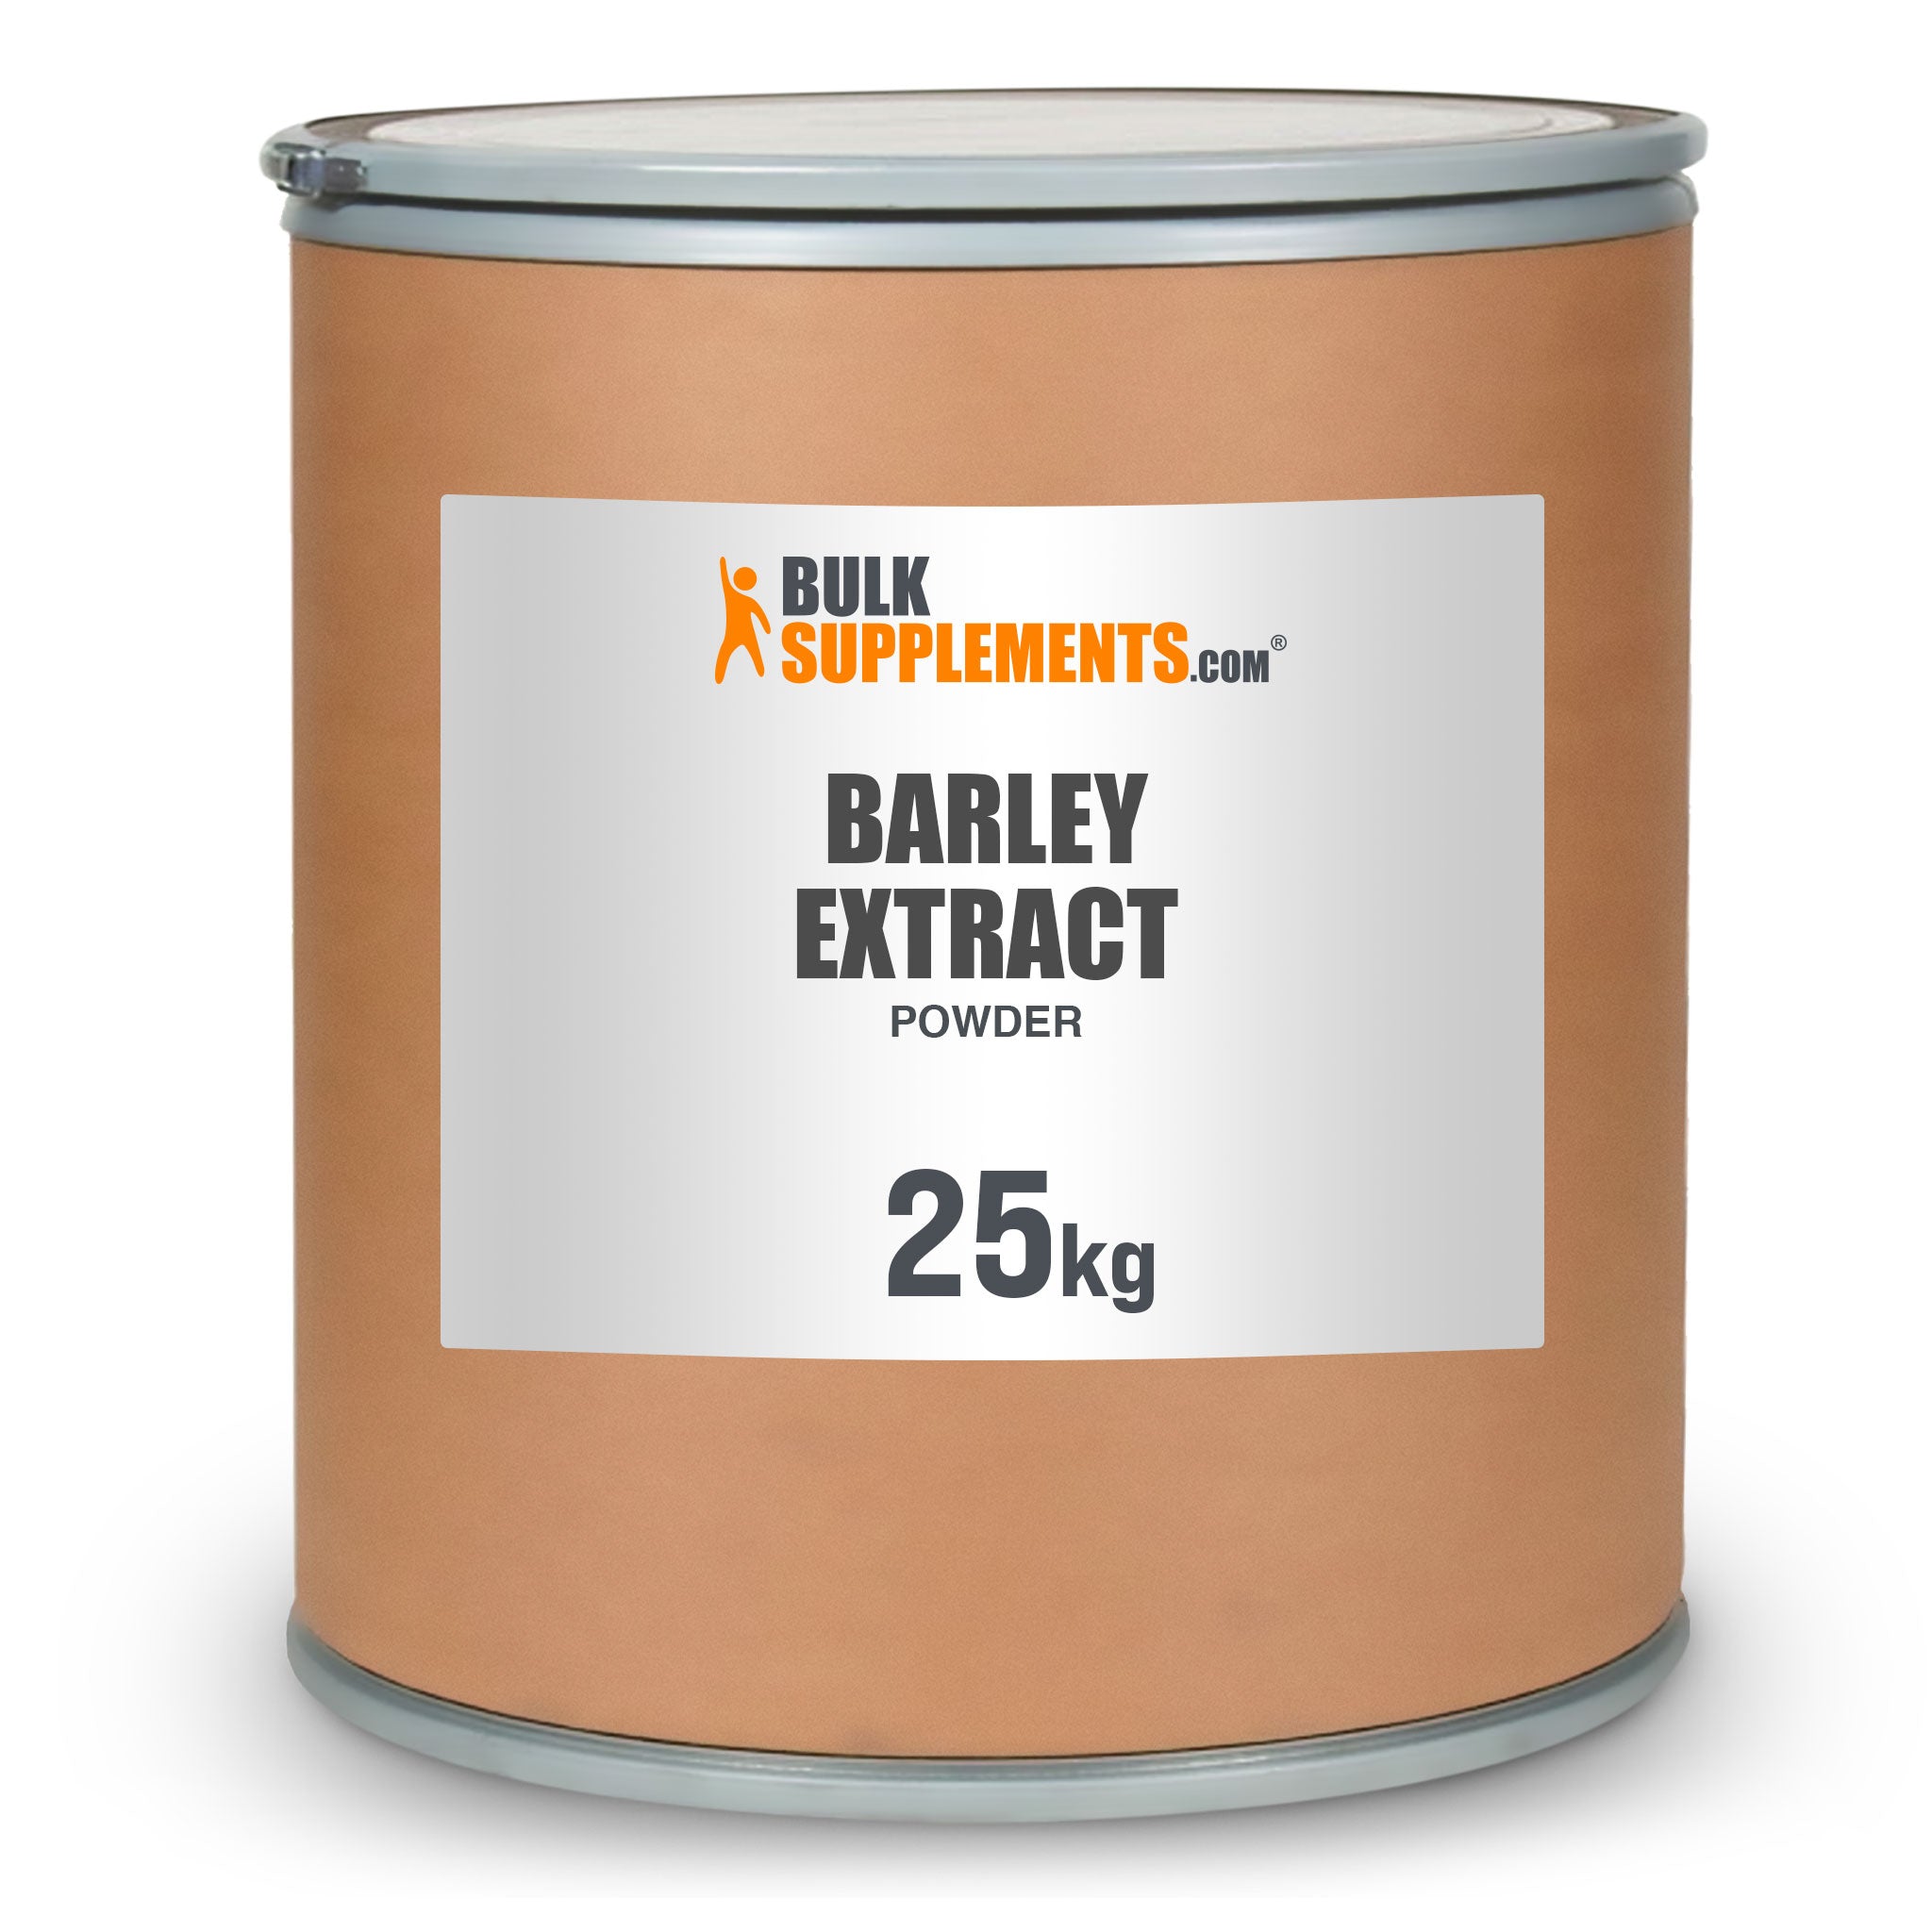 Barley Extract Powder in bulk 25kg can